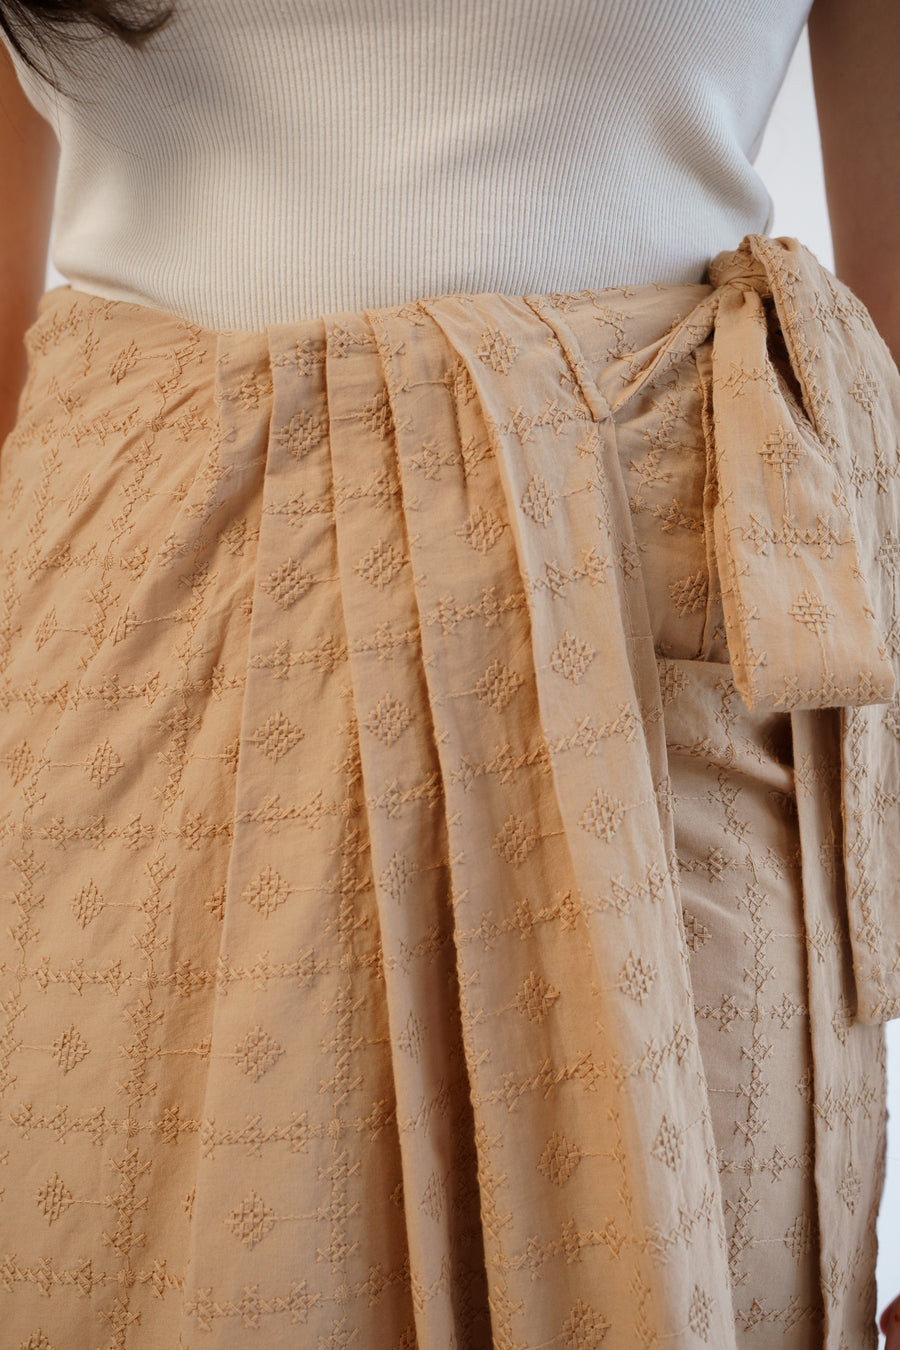 Cross-Stitch Wrap Skirt in Chai